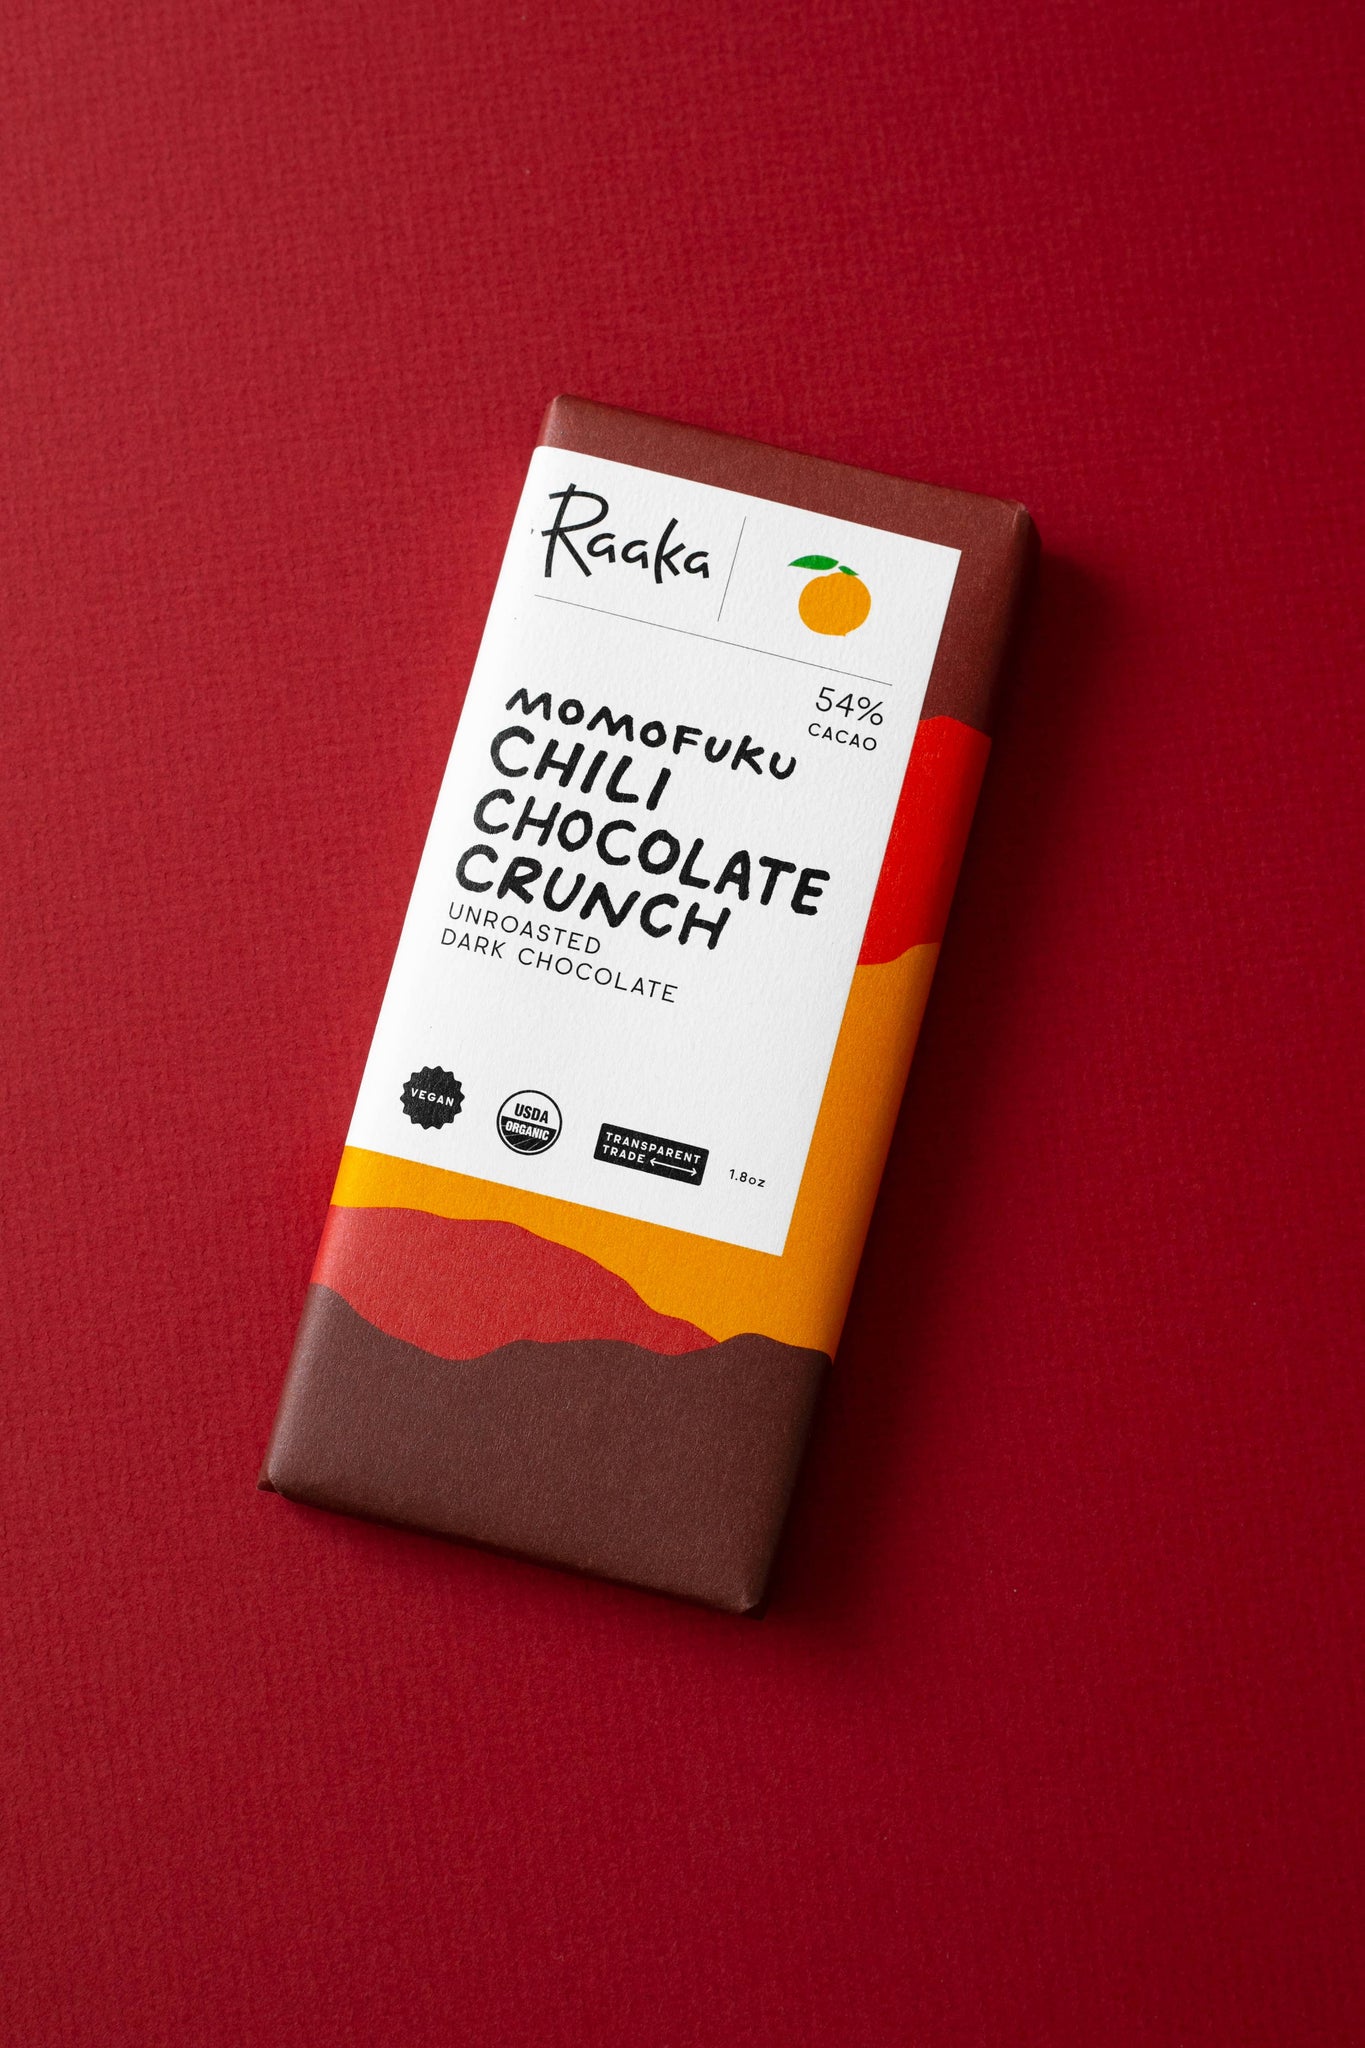 Raaka x Momofuku Chili Chocolate Crunch Bar - Limited Batch